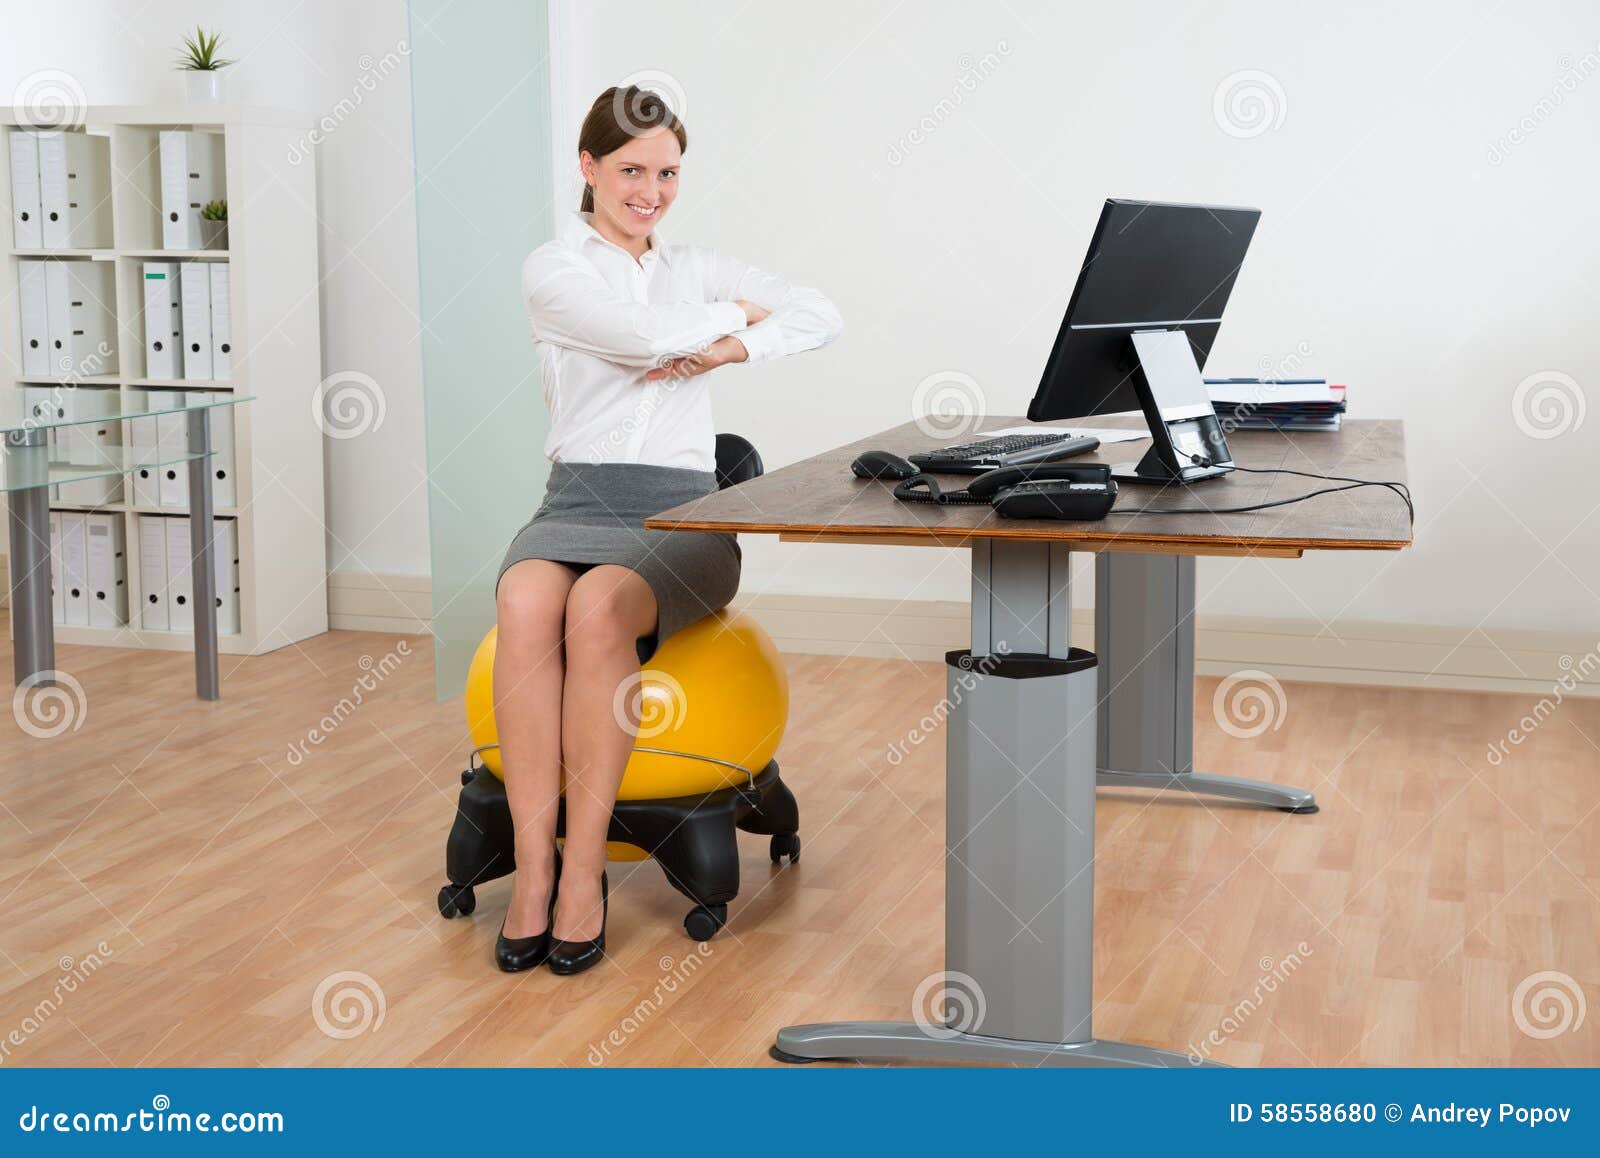 businesswoman exercising on pilates ball